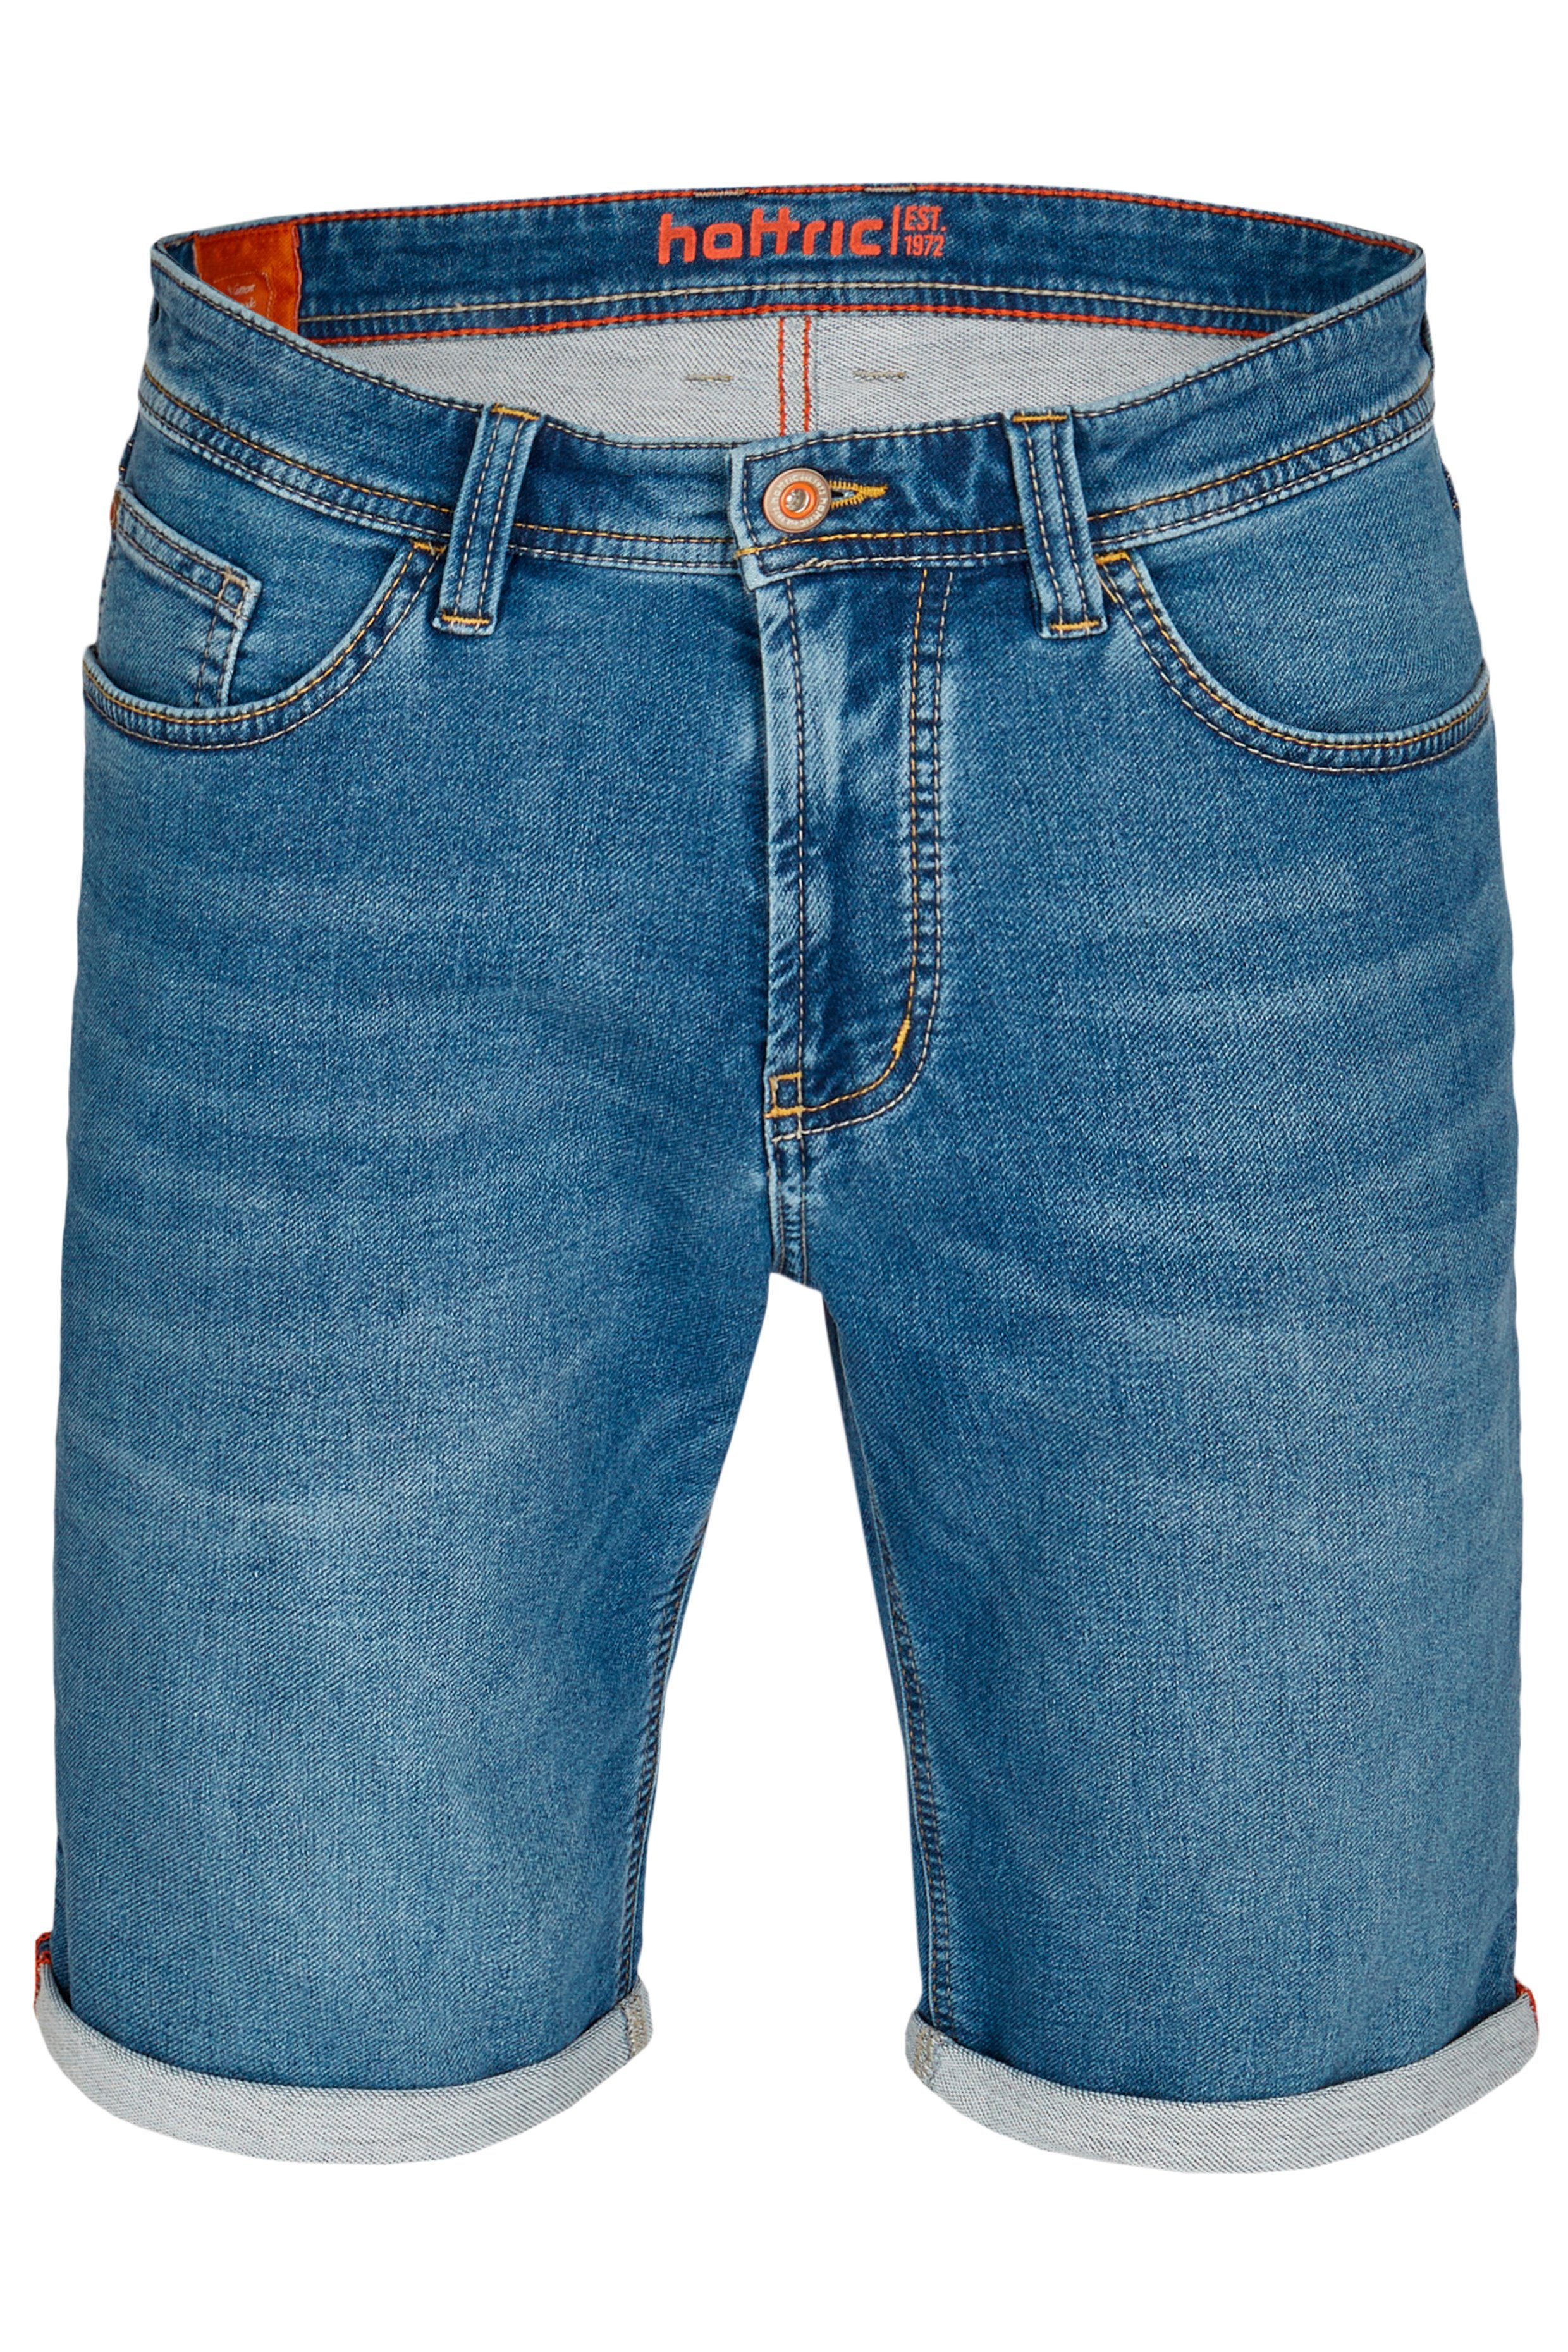 blue Hattric 5-Pocket-Jeans HATTRIC 5712.44 BERMUDA 698835 light